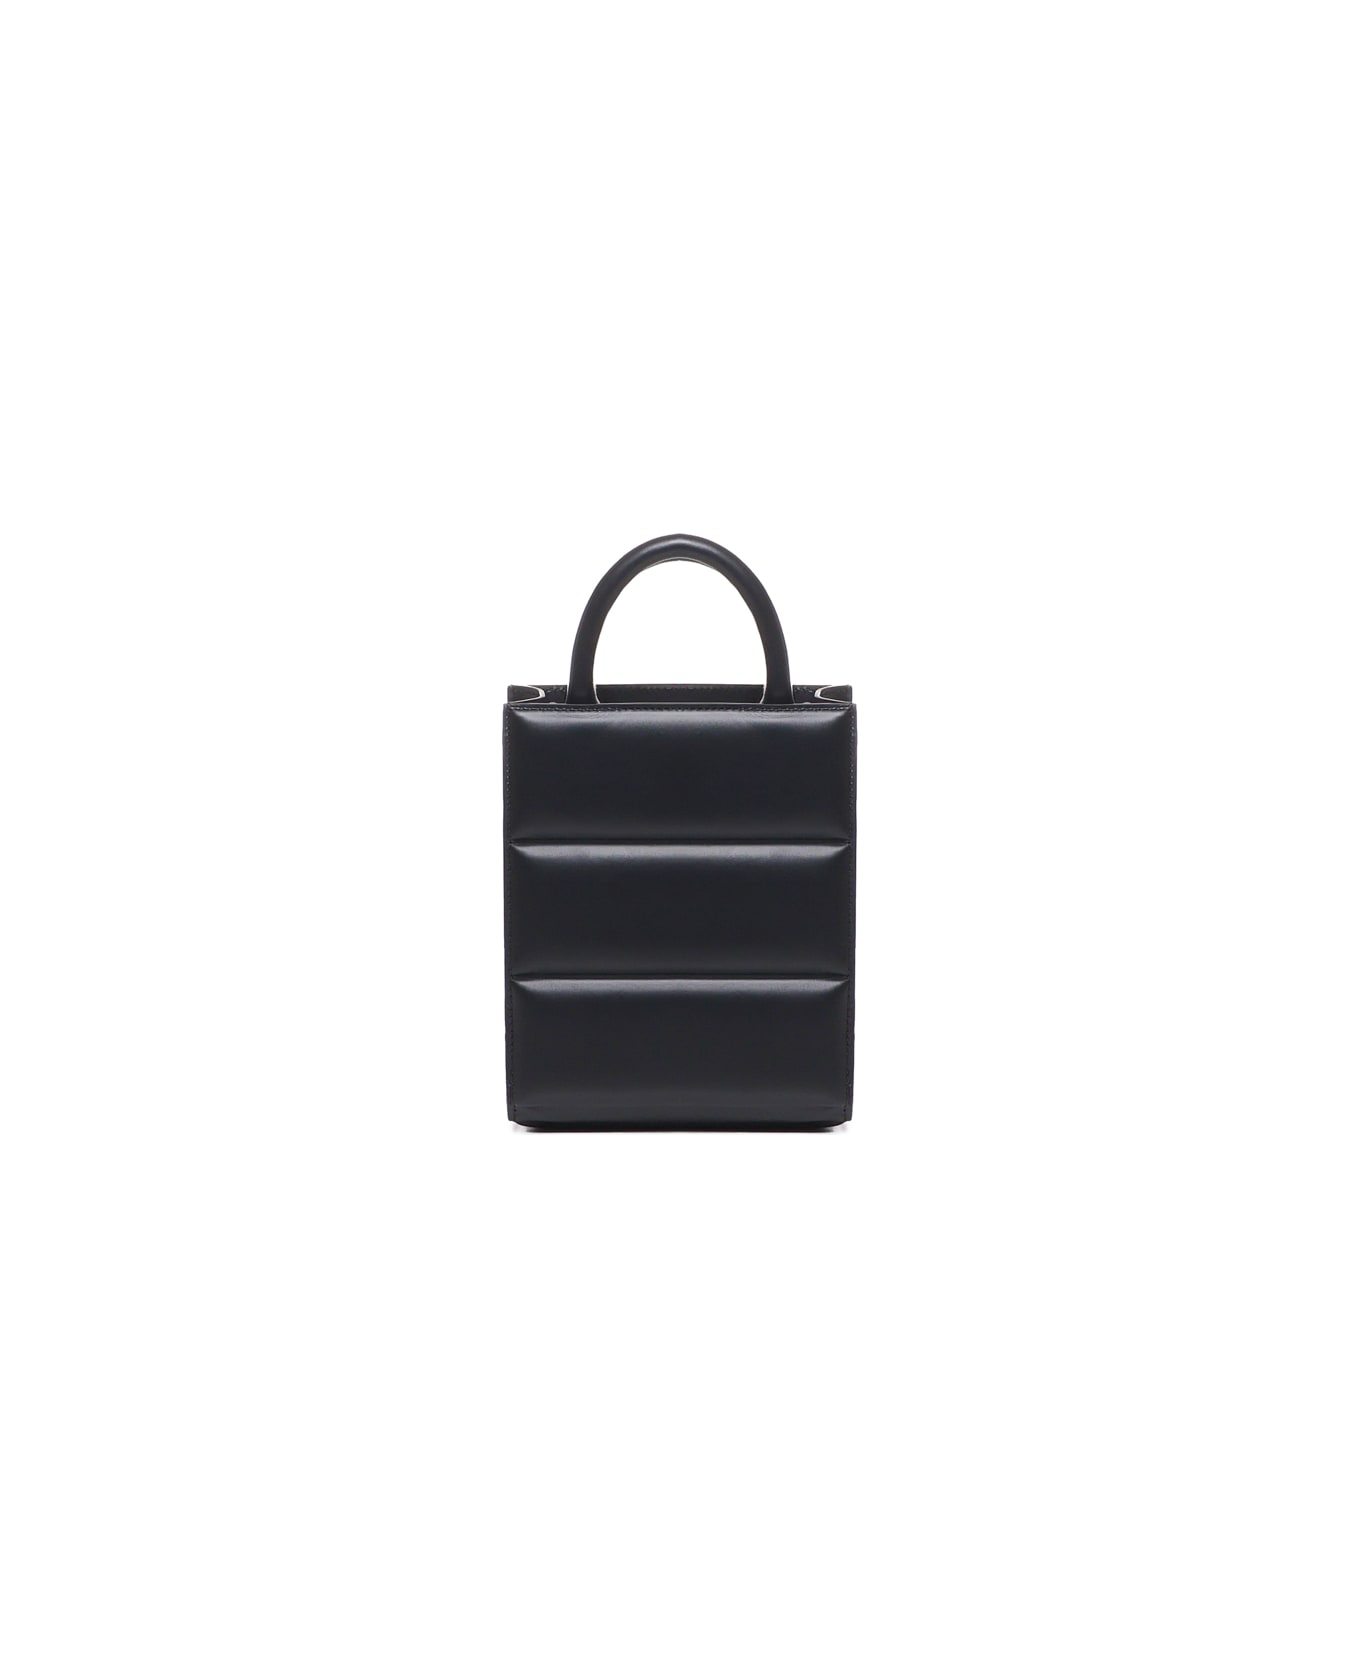 Moncler Leather Doudoune Mini Tote Bag - Nero